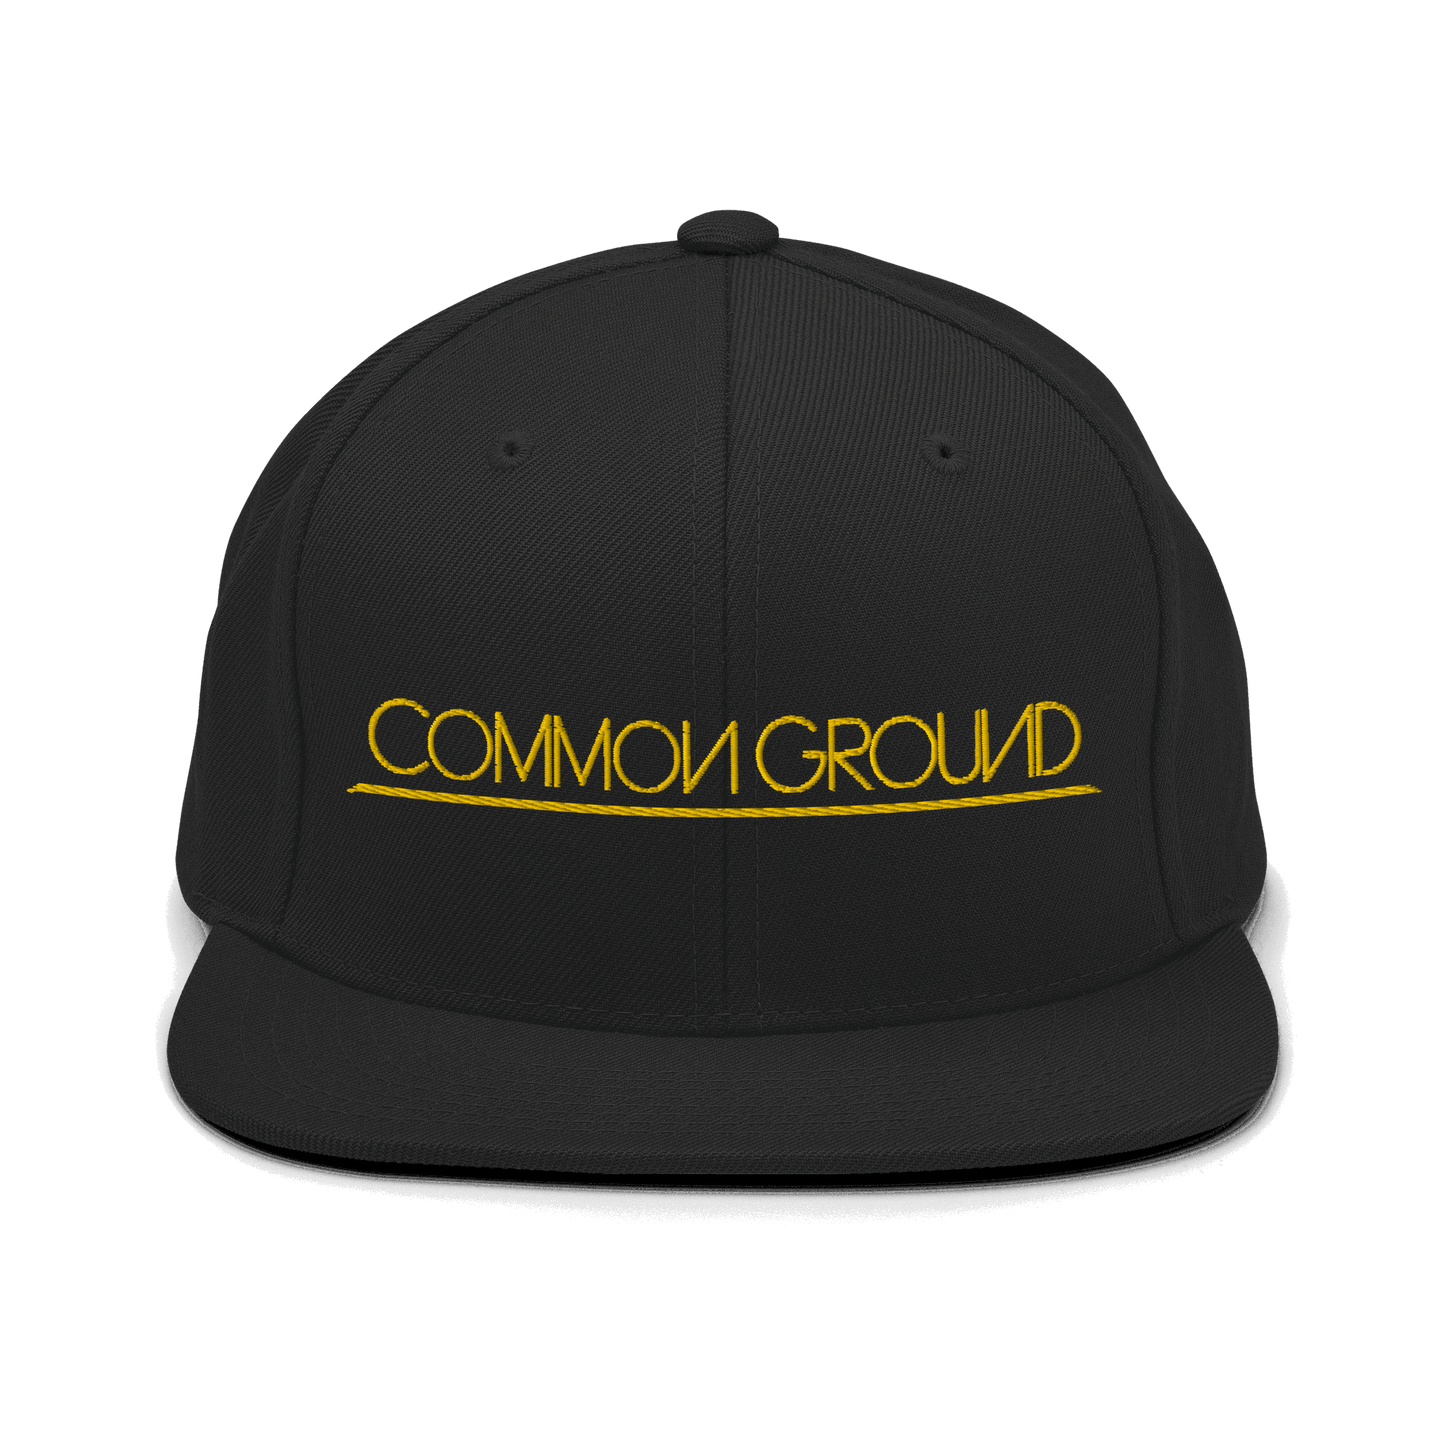 Common Ground Originals - Snapback Hat